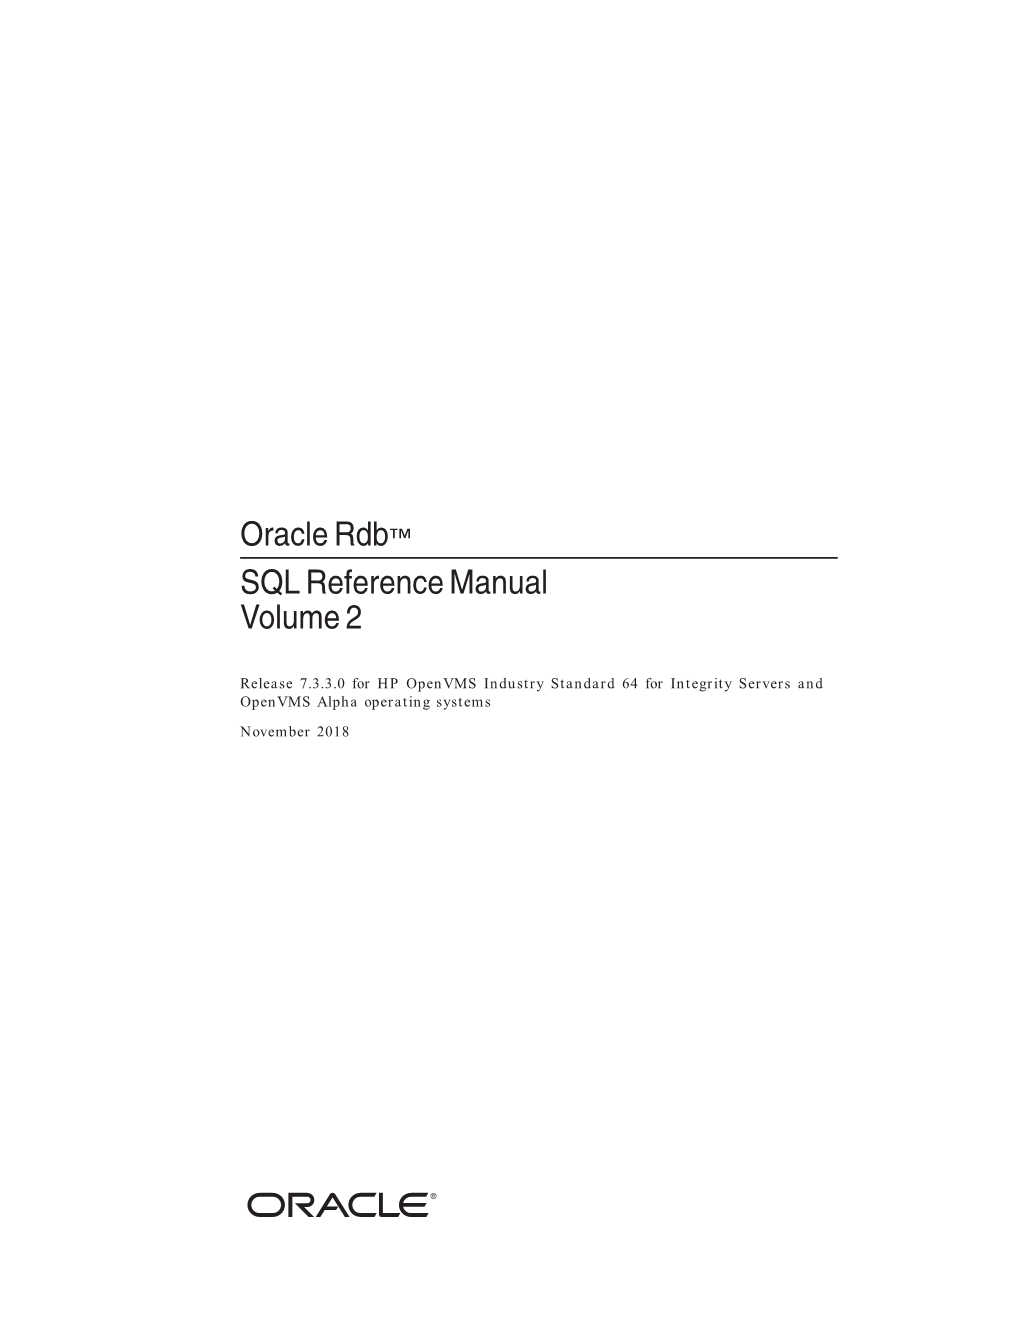 Oracle Rdb™ SQL Reference Manual Volume 2